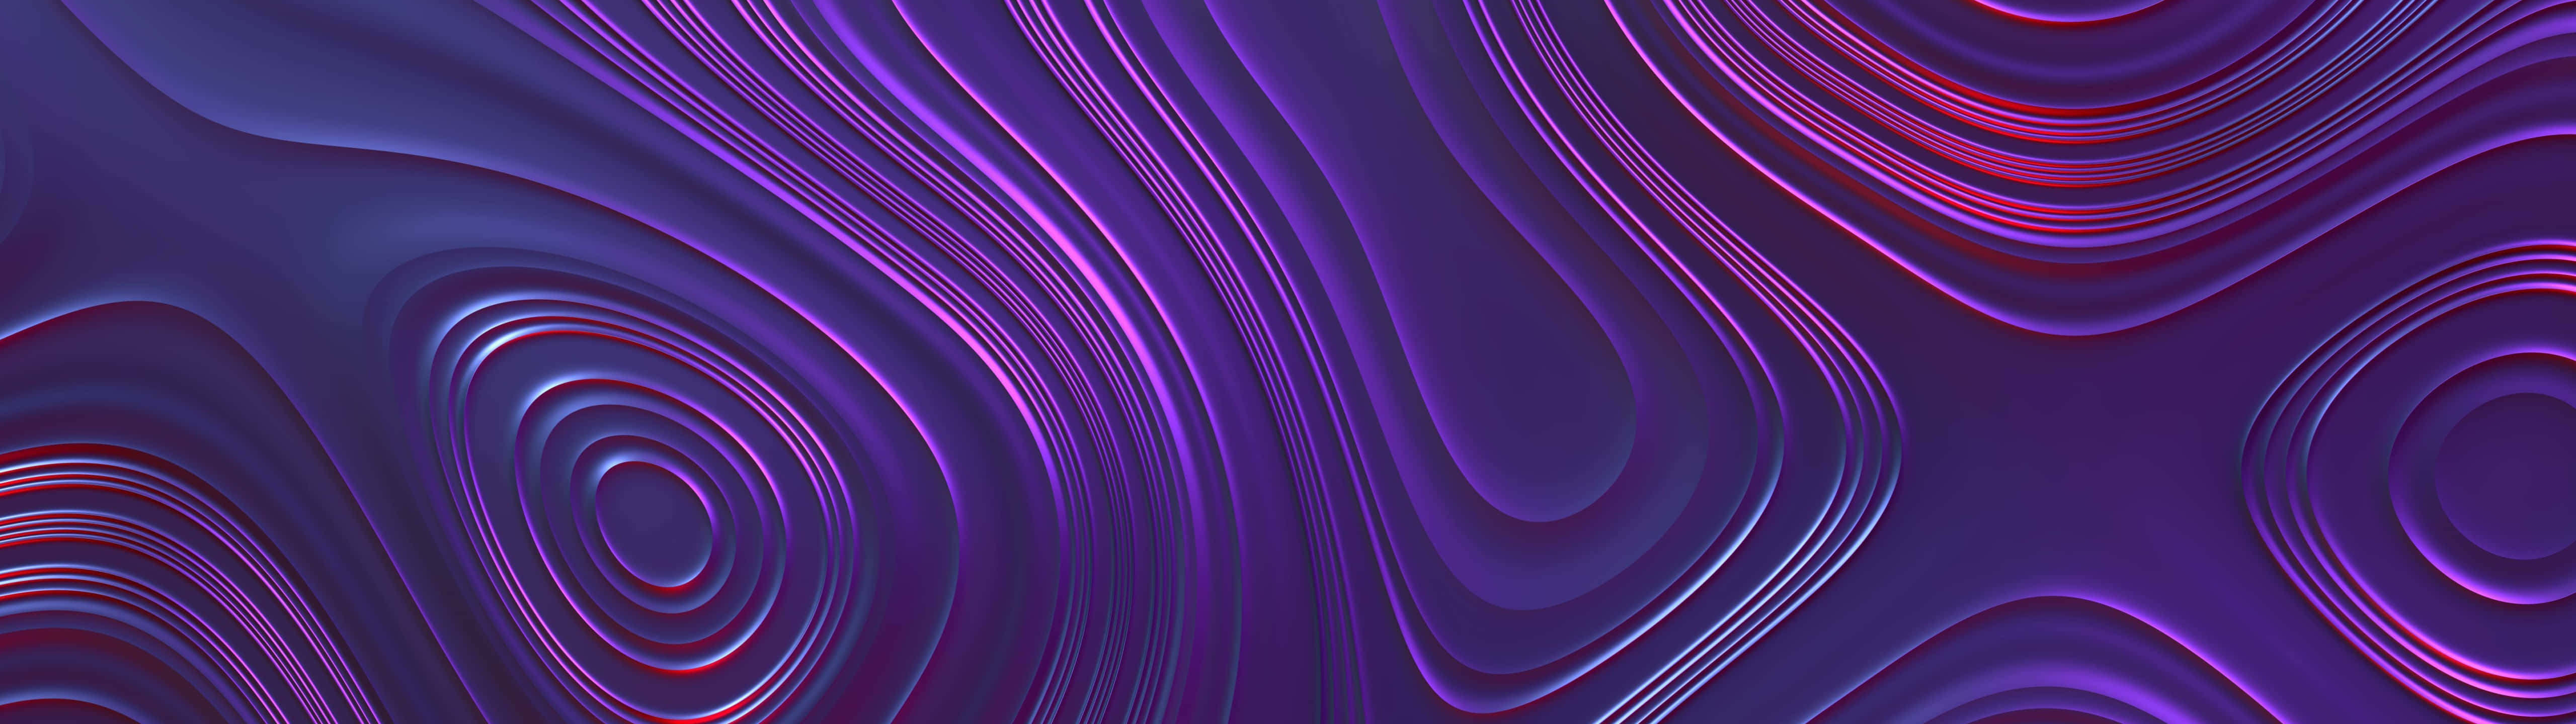 Oval Violet Swirls Wallpaper